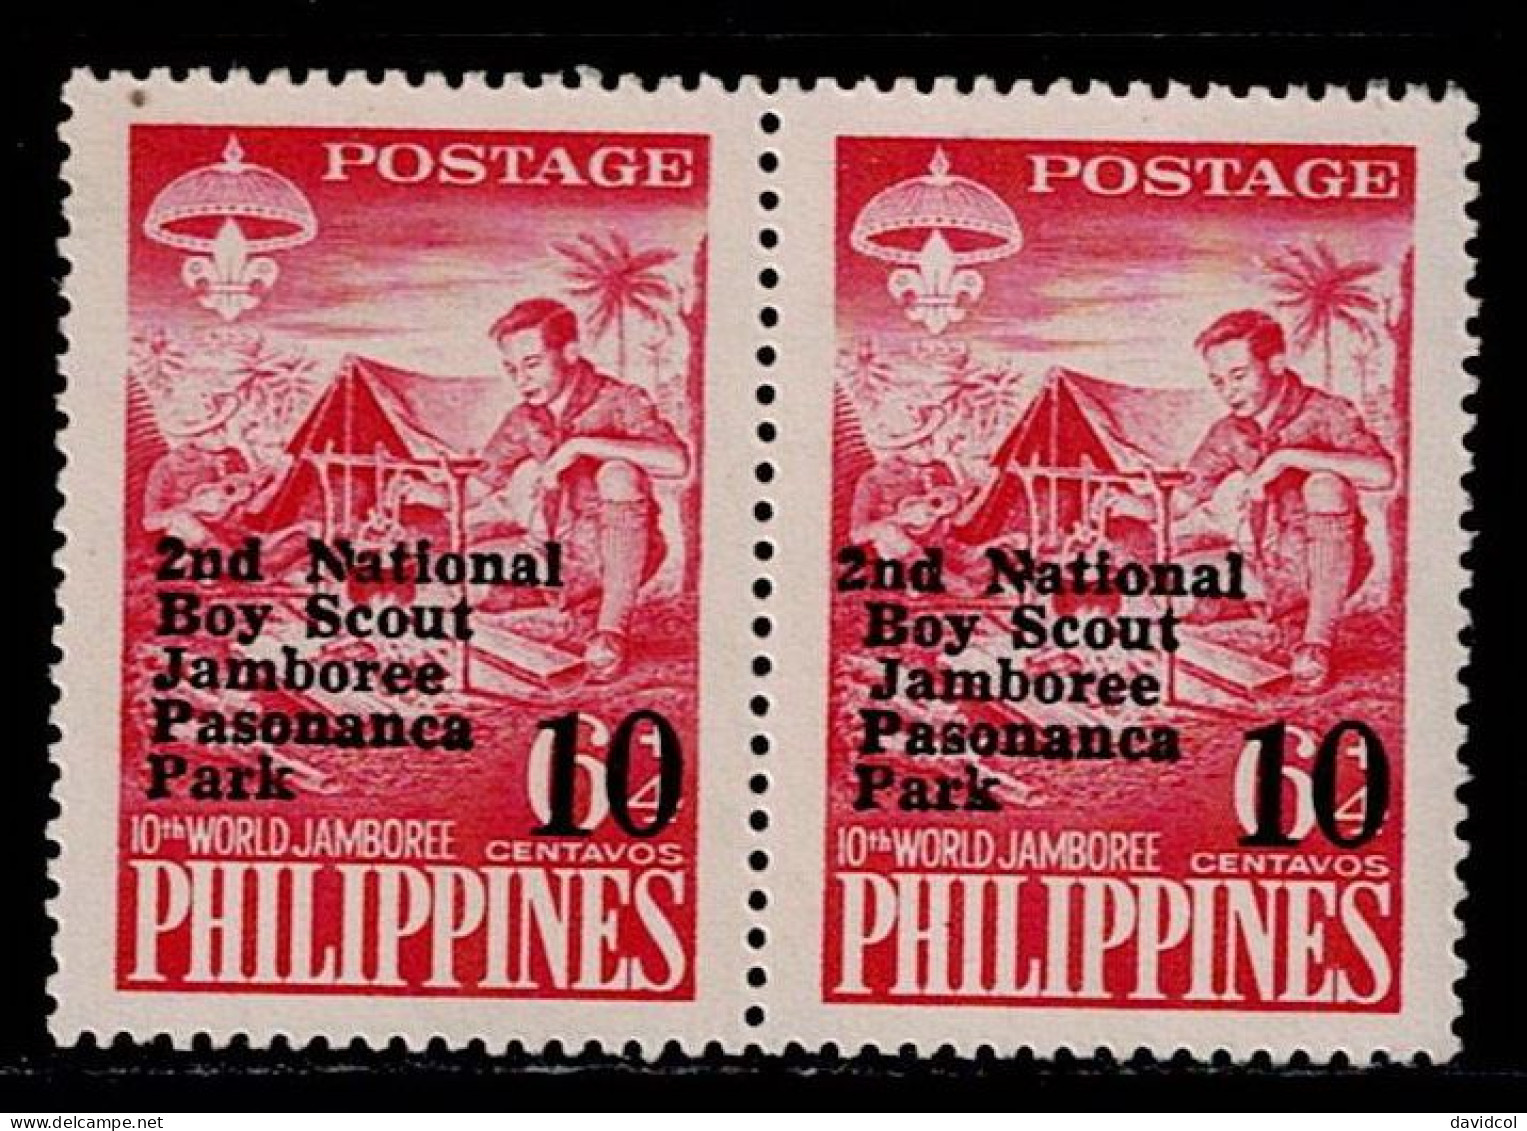 FIL-13- PHILIPPINES - 1961 - MNH -SCOUTS- ERROR - 2ND NATIONAL BOY SCOUT JAMBOREE OVPTD - Philippinen